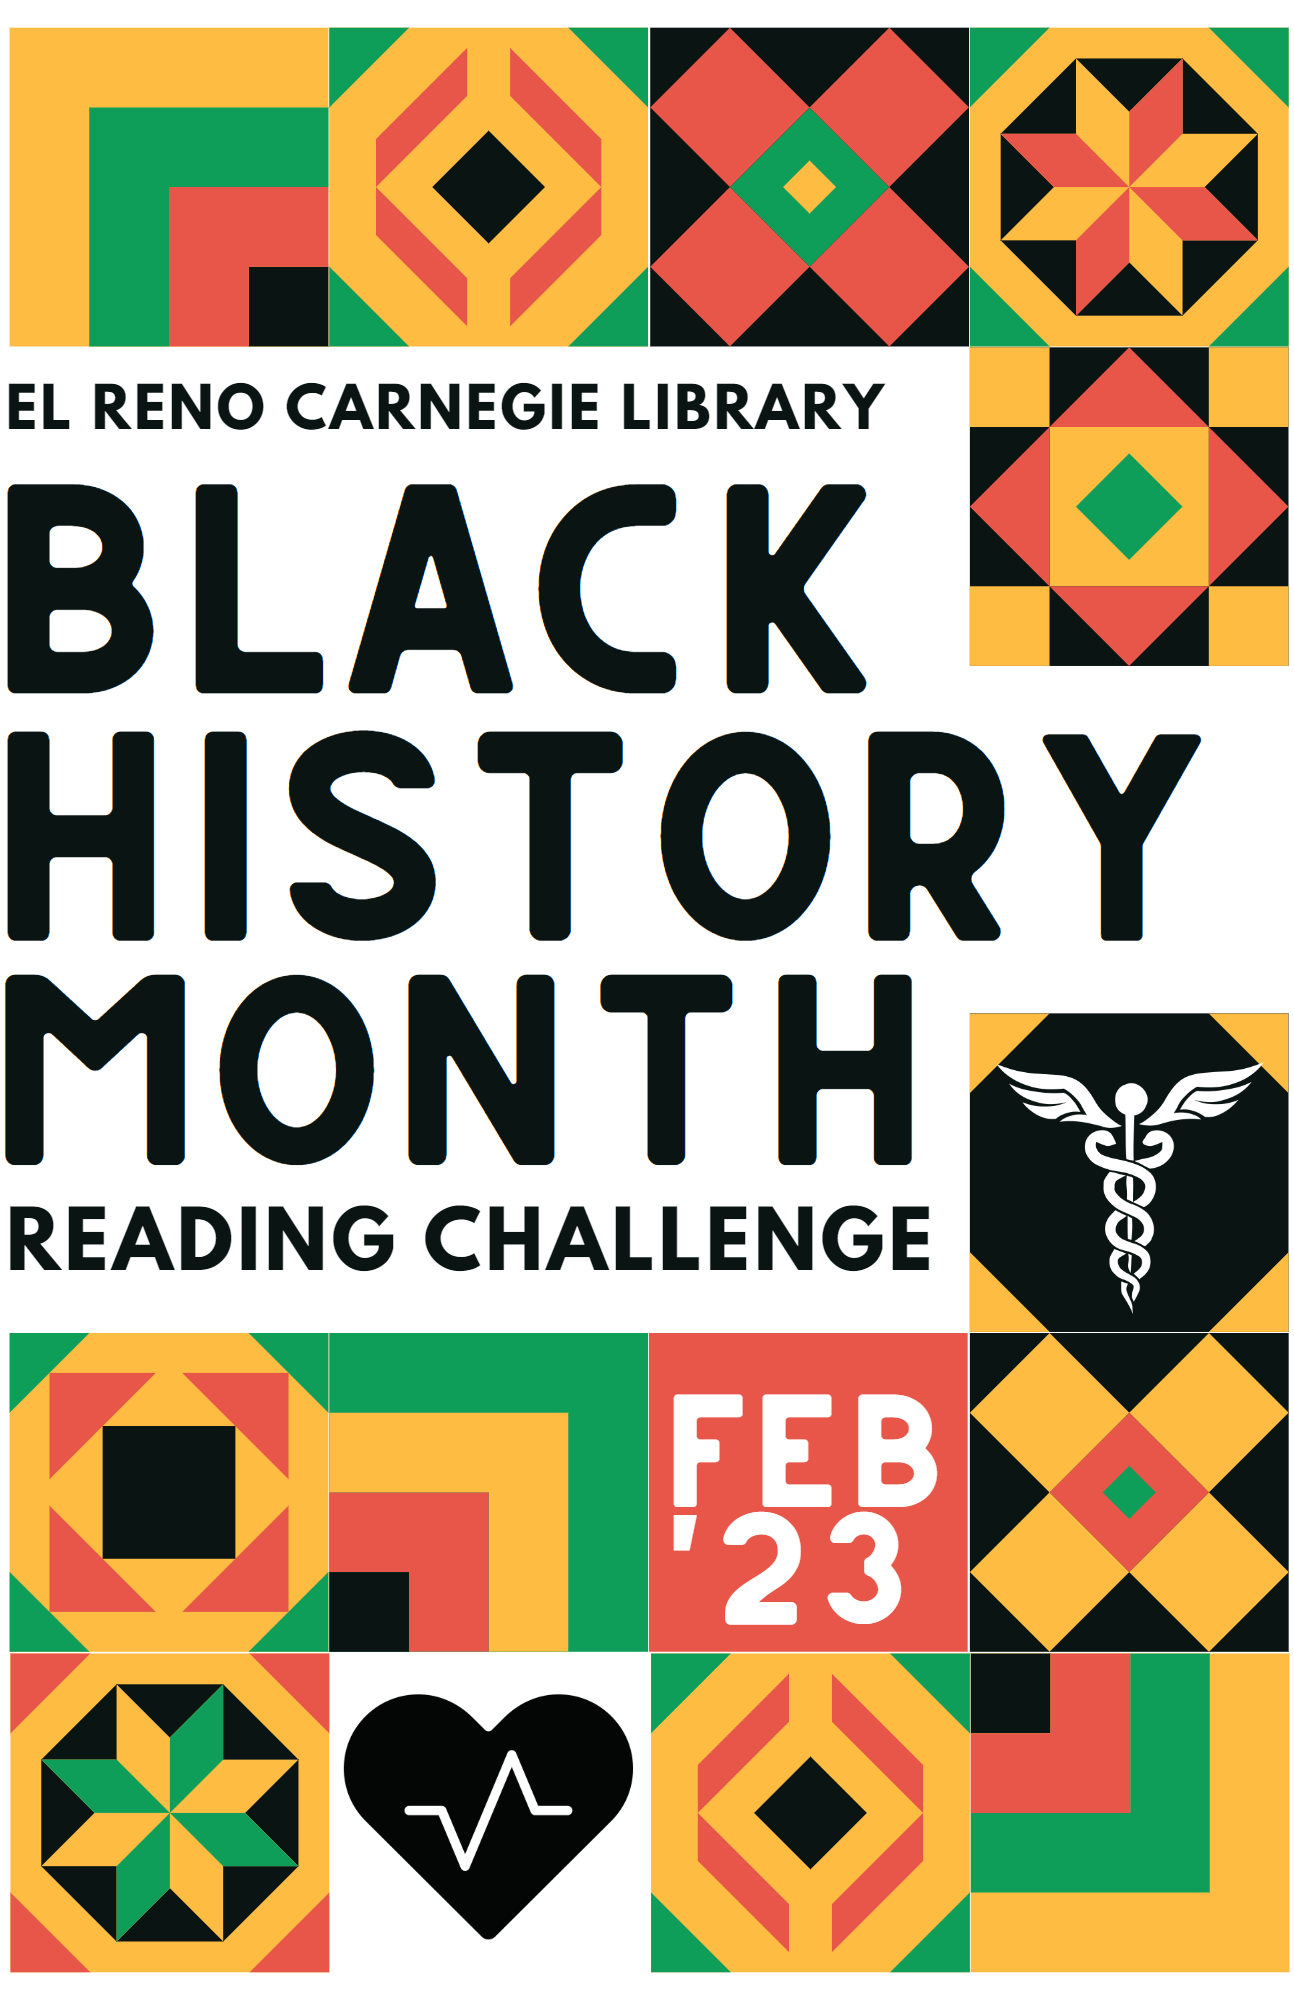 Black History Month Challenge Web Flyer